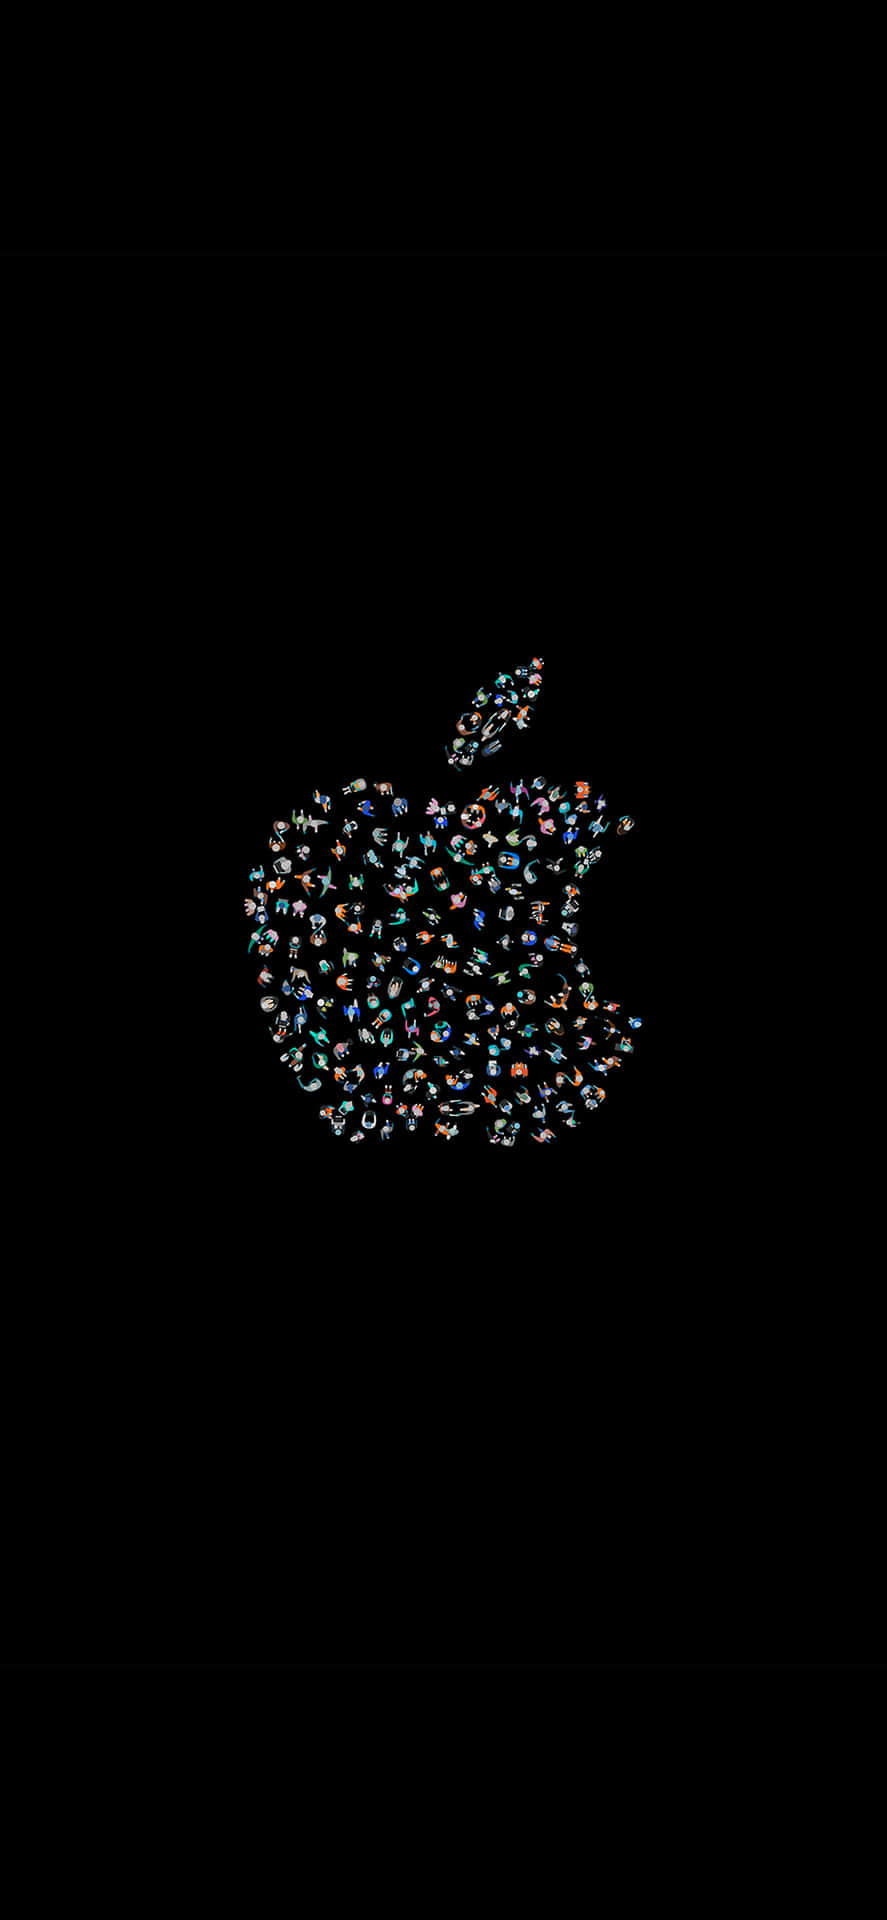 Inventive Logo Amazing Apple Hd Iphone